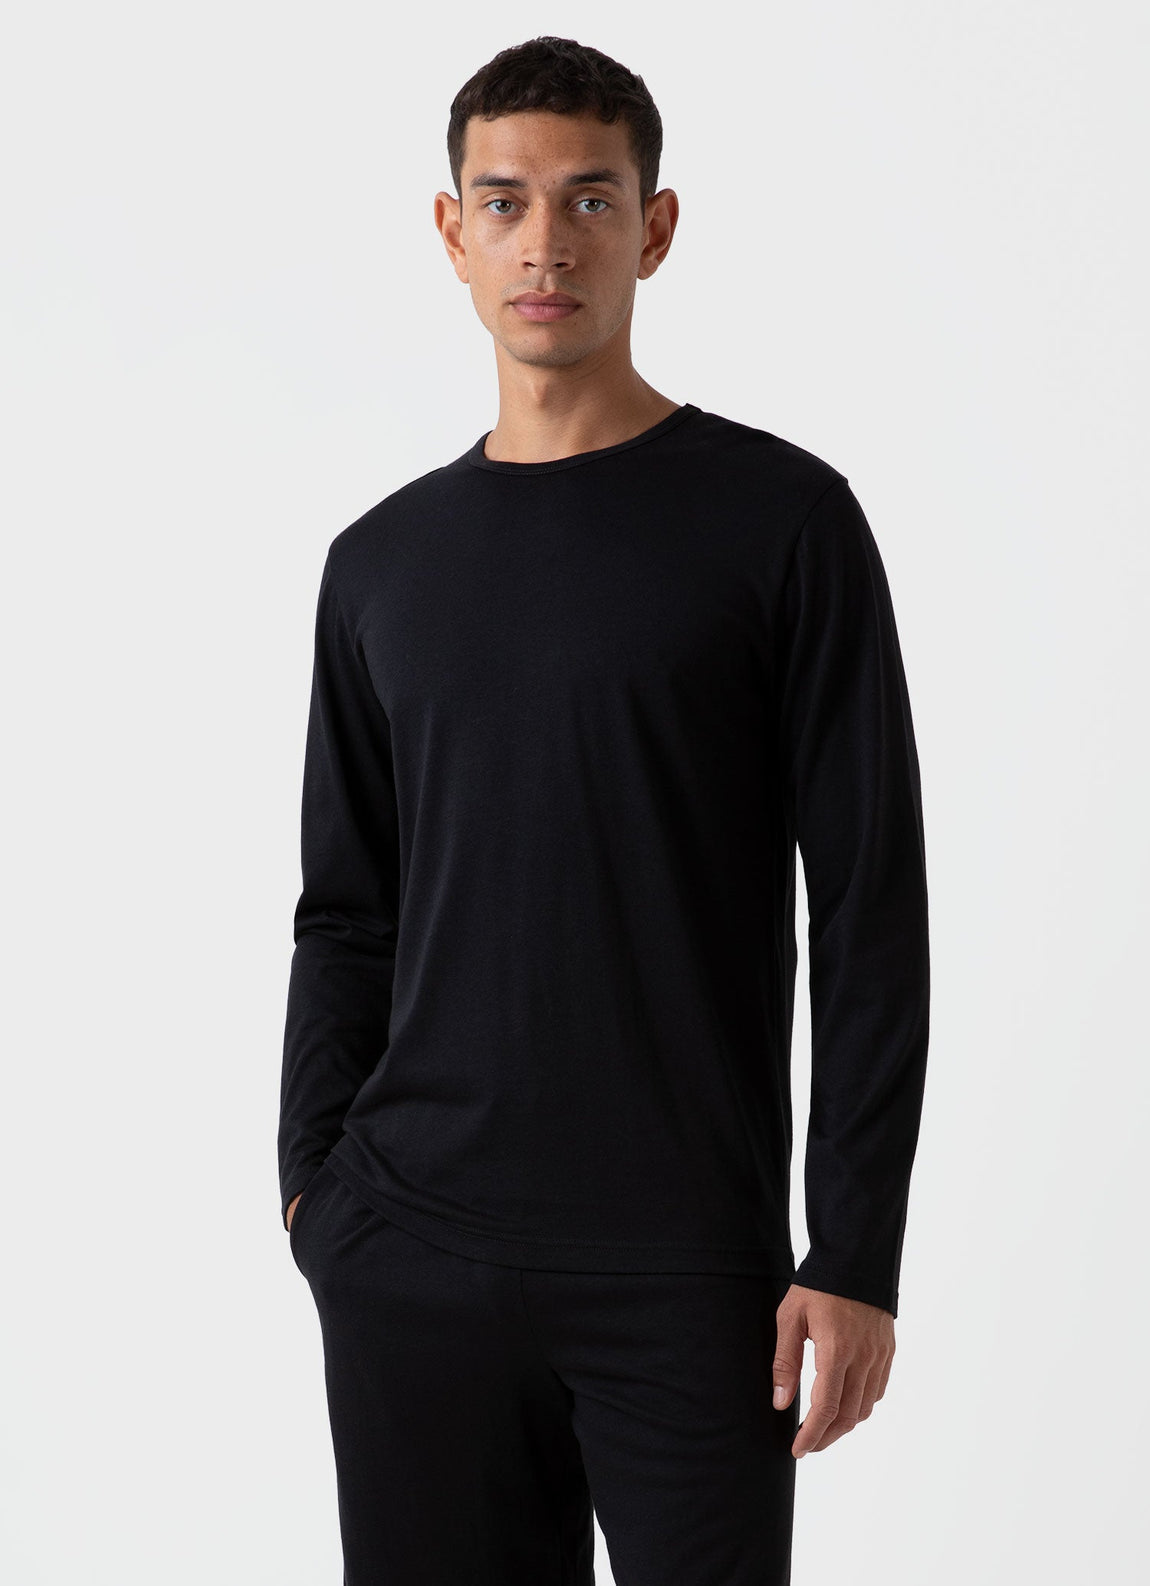 Men's Cotton Modal Lounge Long Sleeve T-shirt in Black